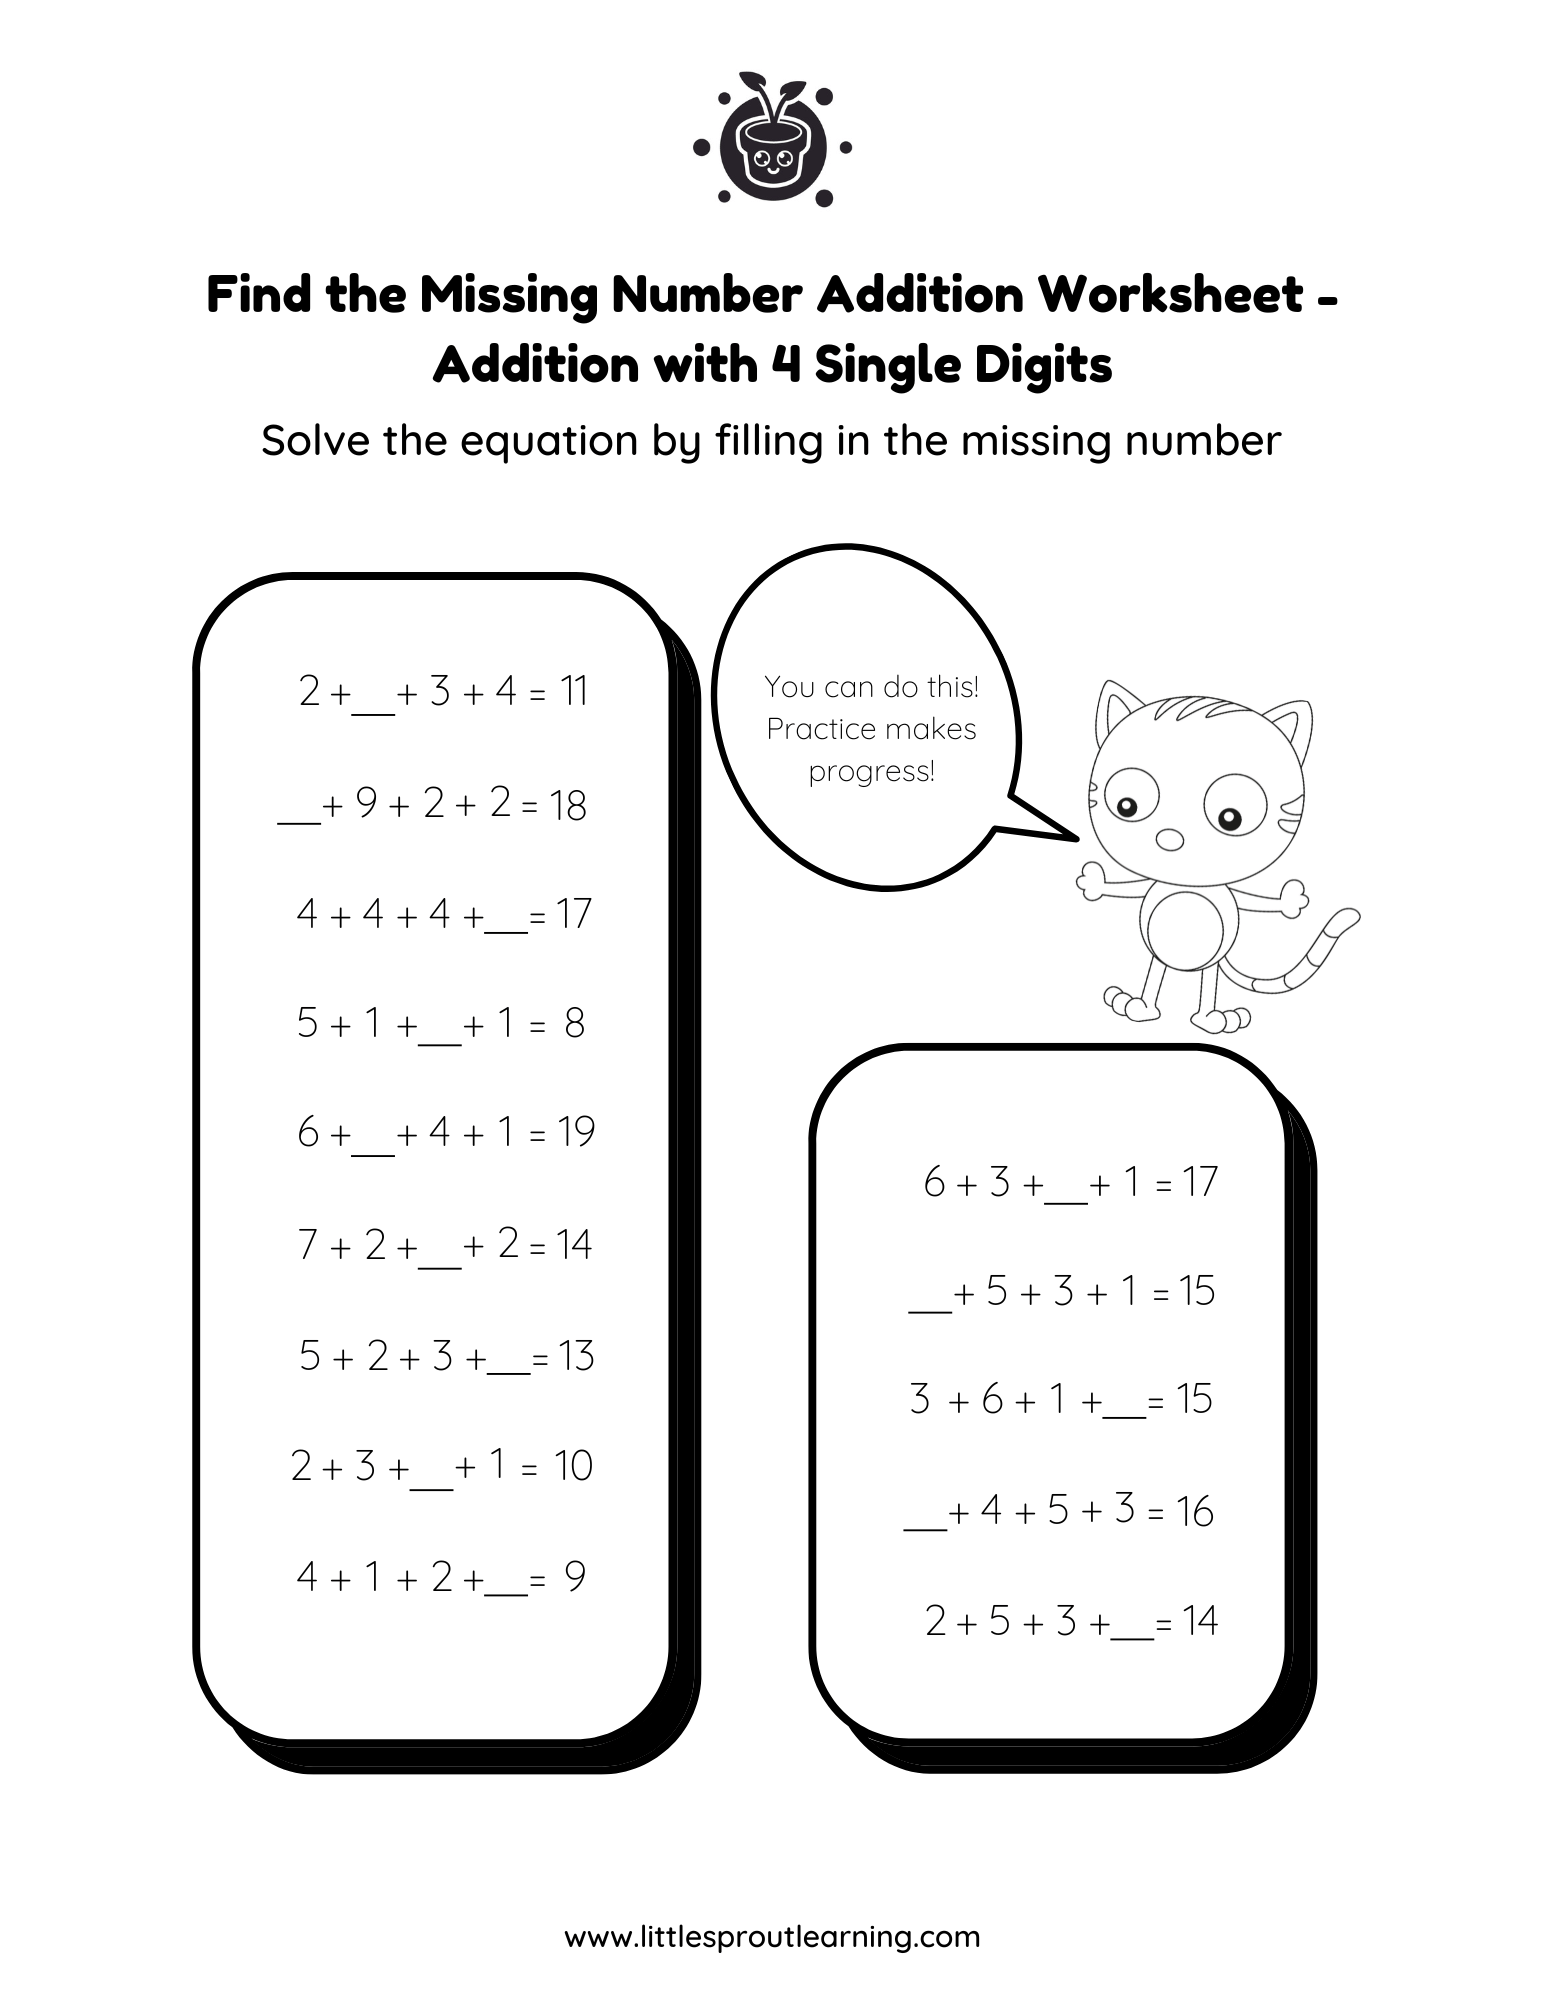 Find the Missing Number Addition Worksheet – Adding 4 Single Digit Numbers